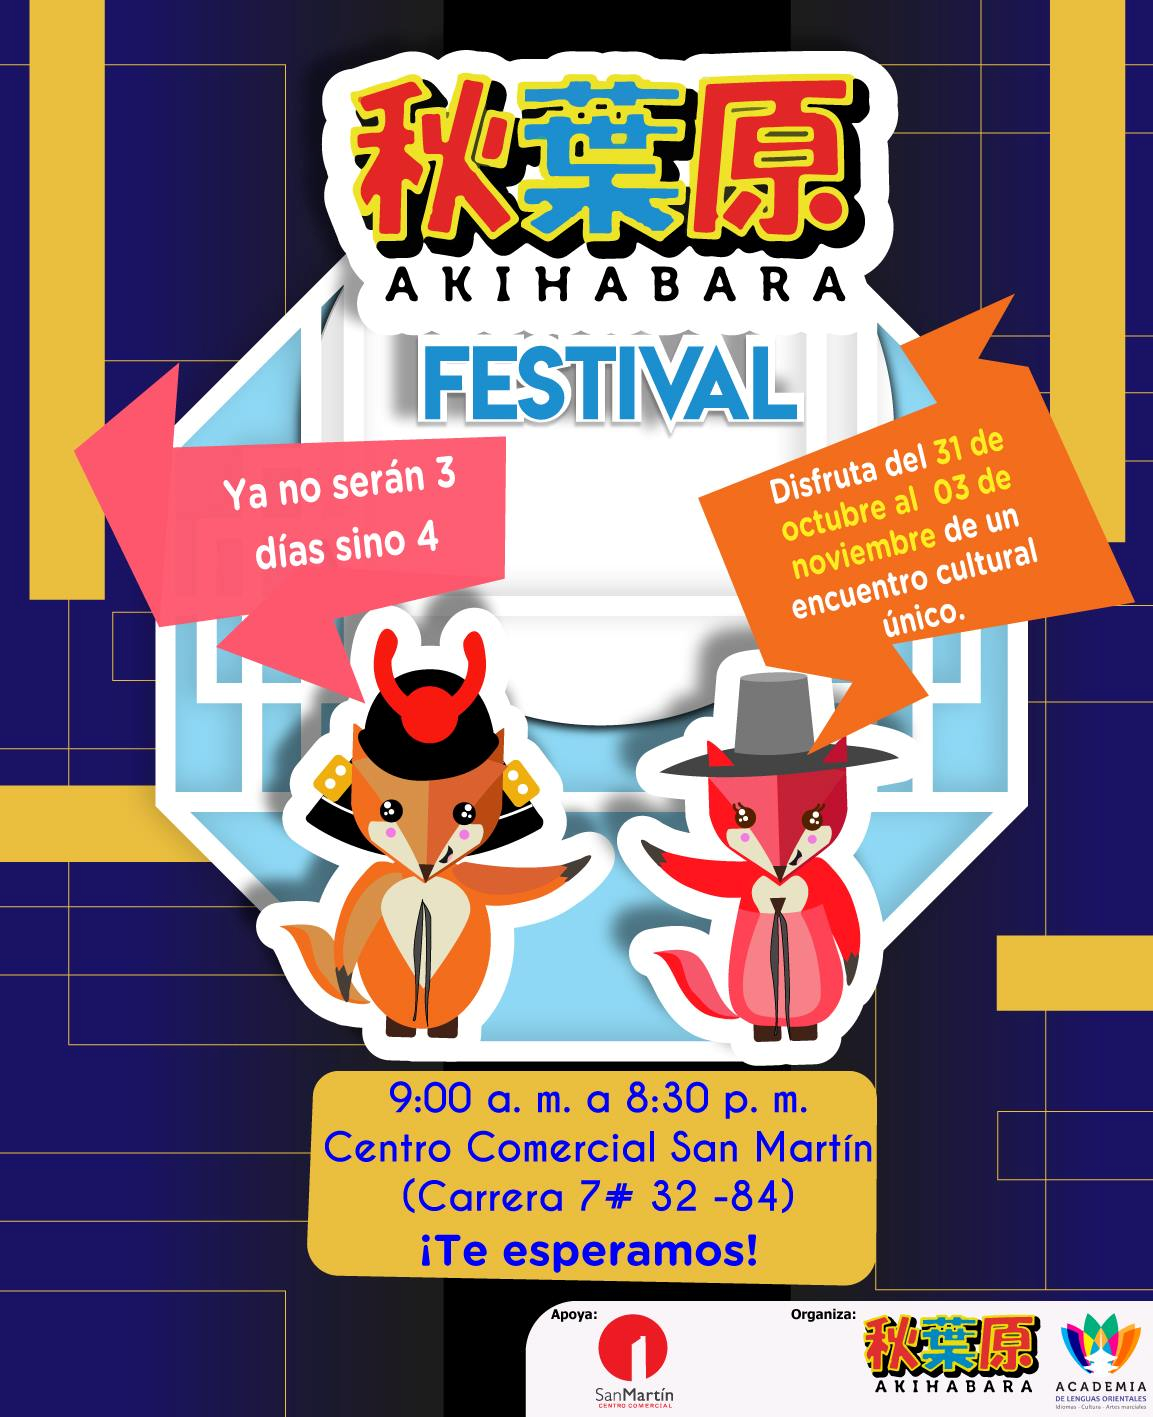 Akihabara Festival Bogota Colombia en 2019